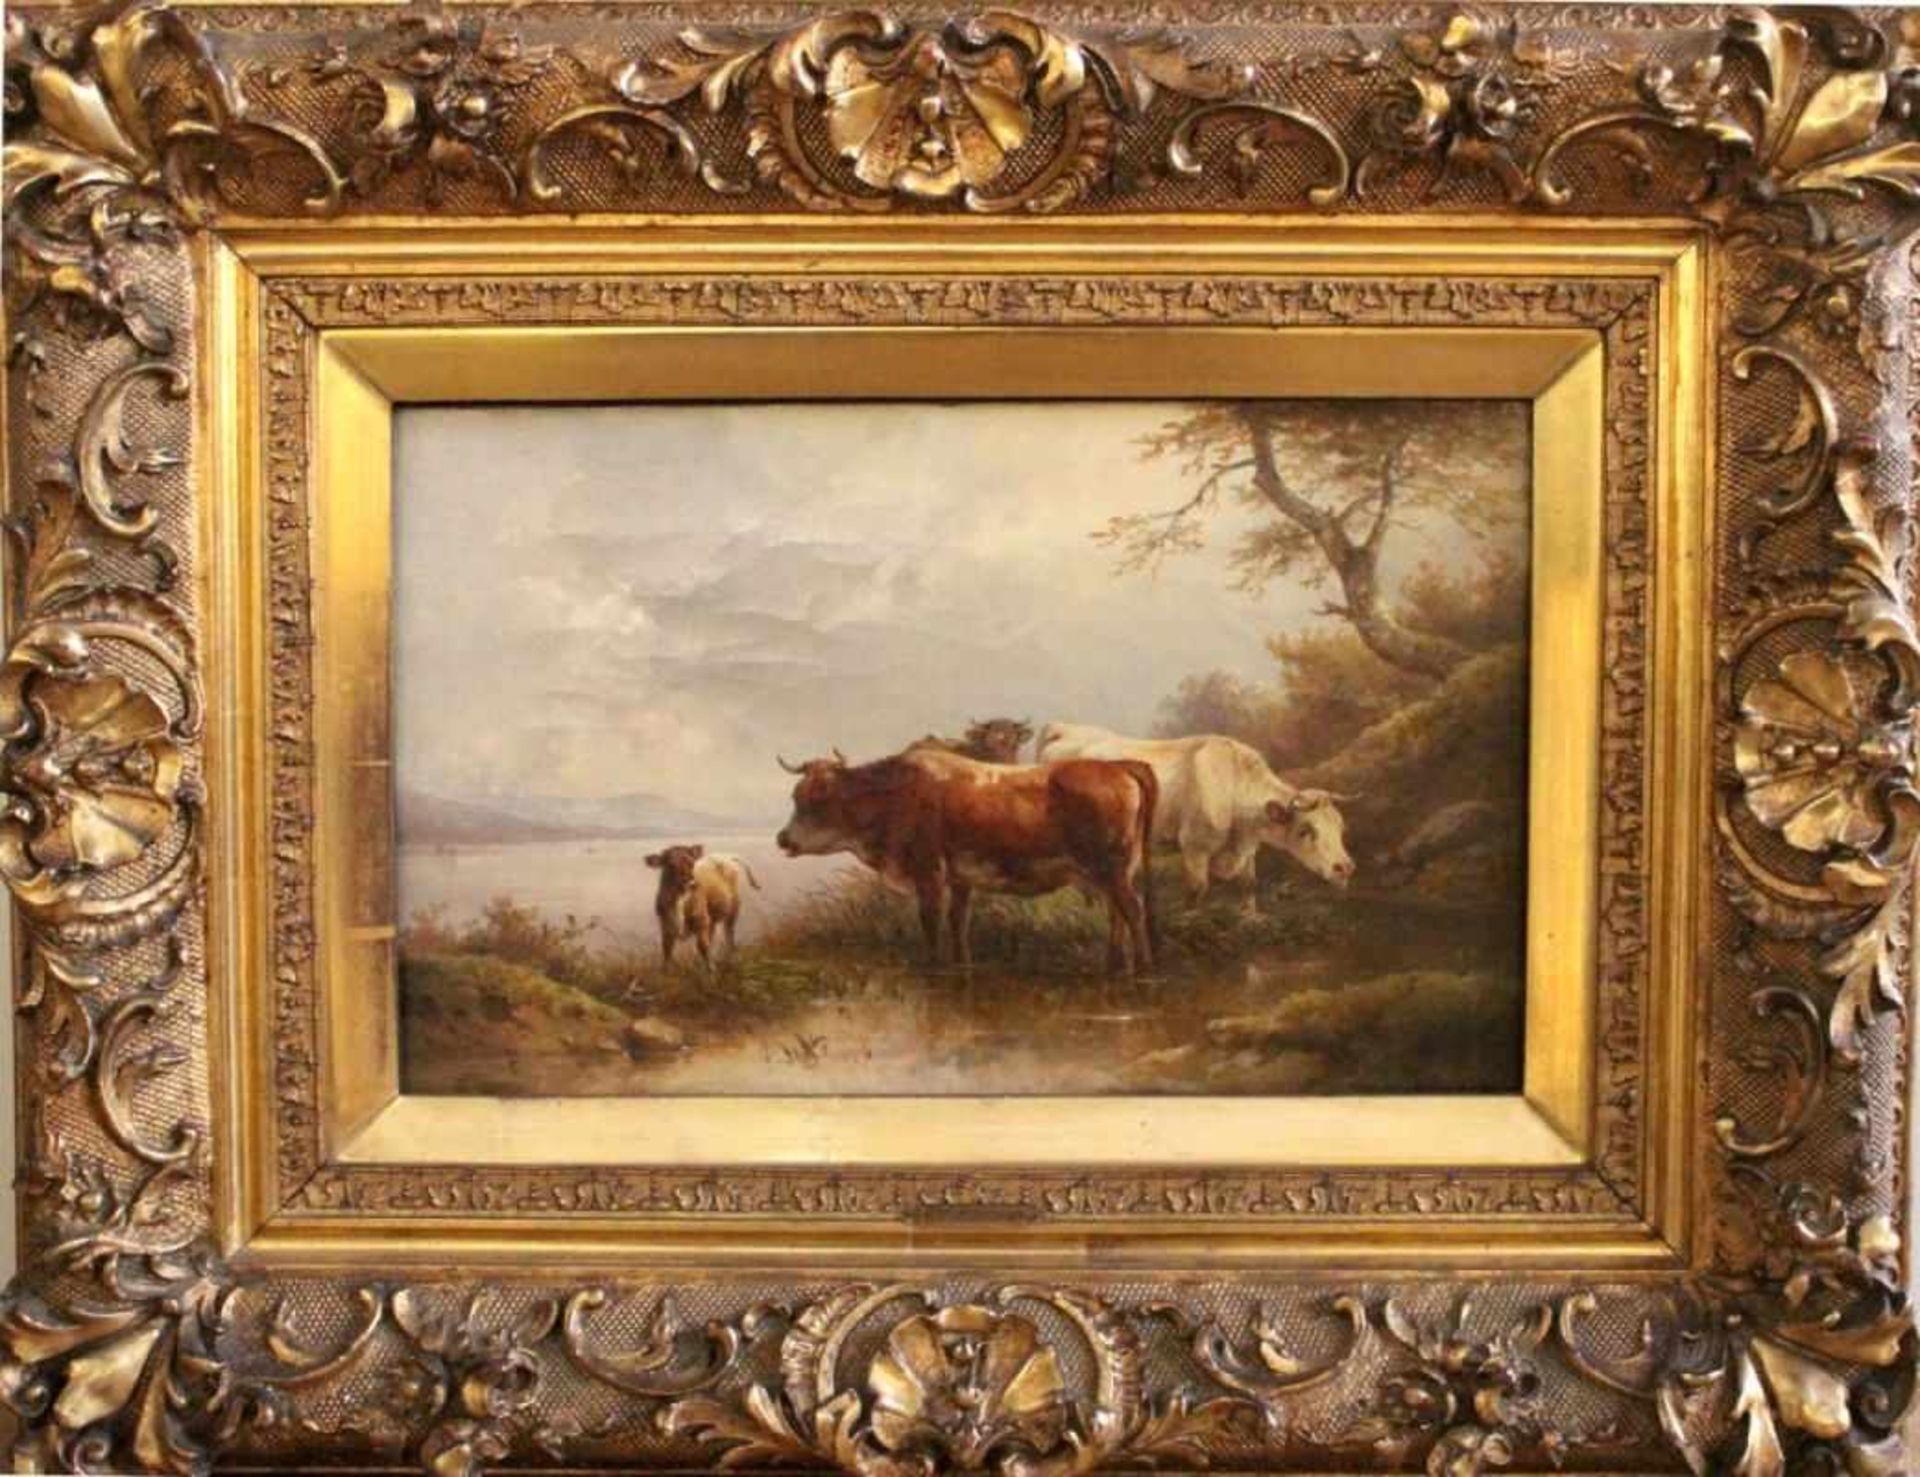 Gemälde - Edmund Mahlknecht (1820 Wien - 1903) "Kühe am Seeufer", r.u. signiert E. Mahlknecht, Öl